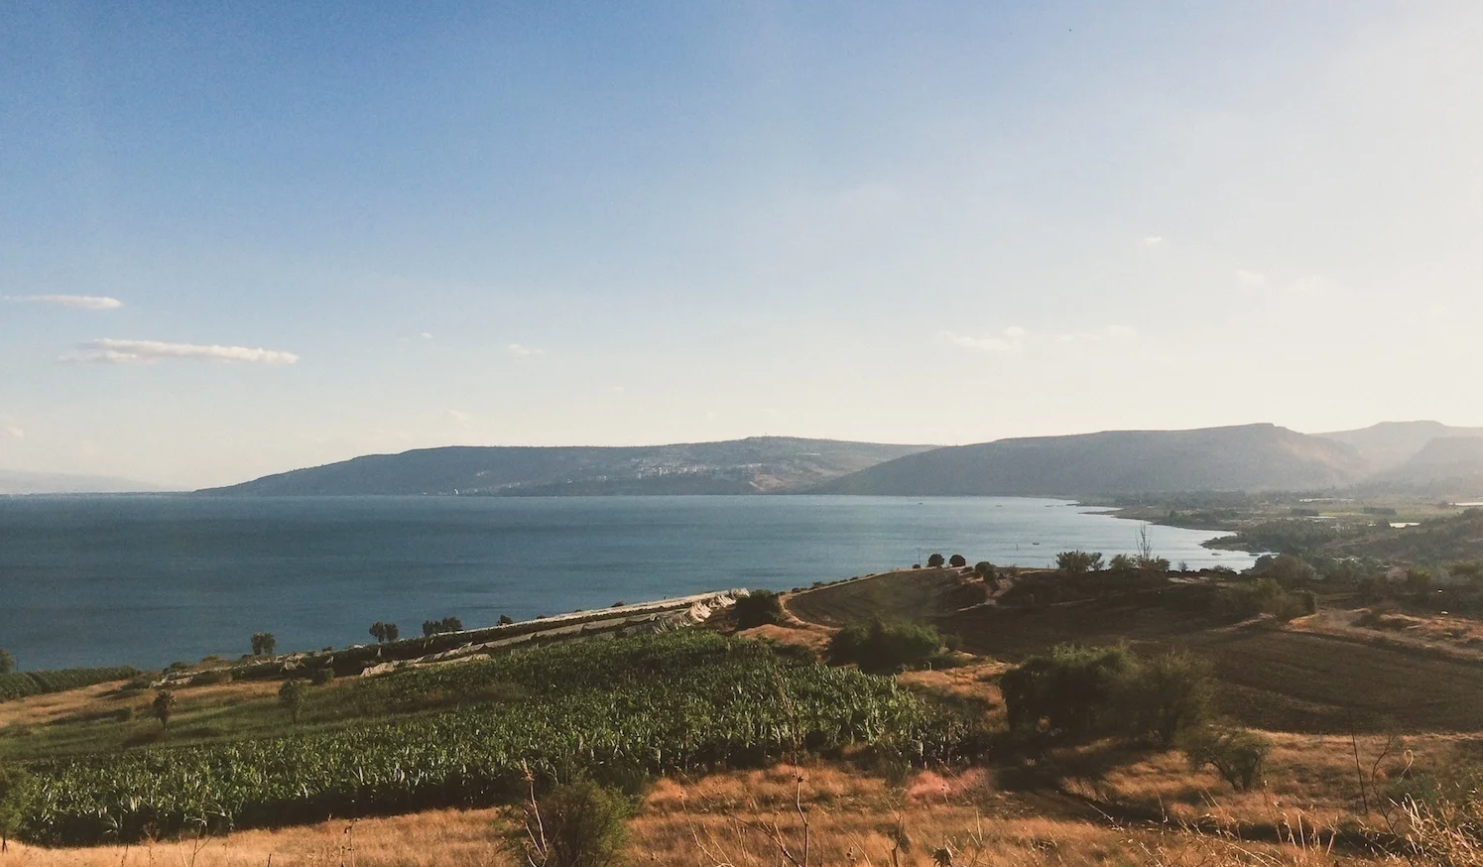 Sea-of-Galilee